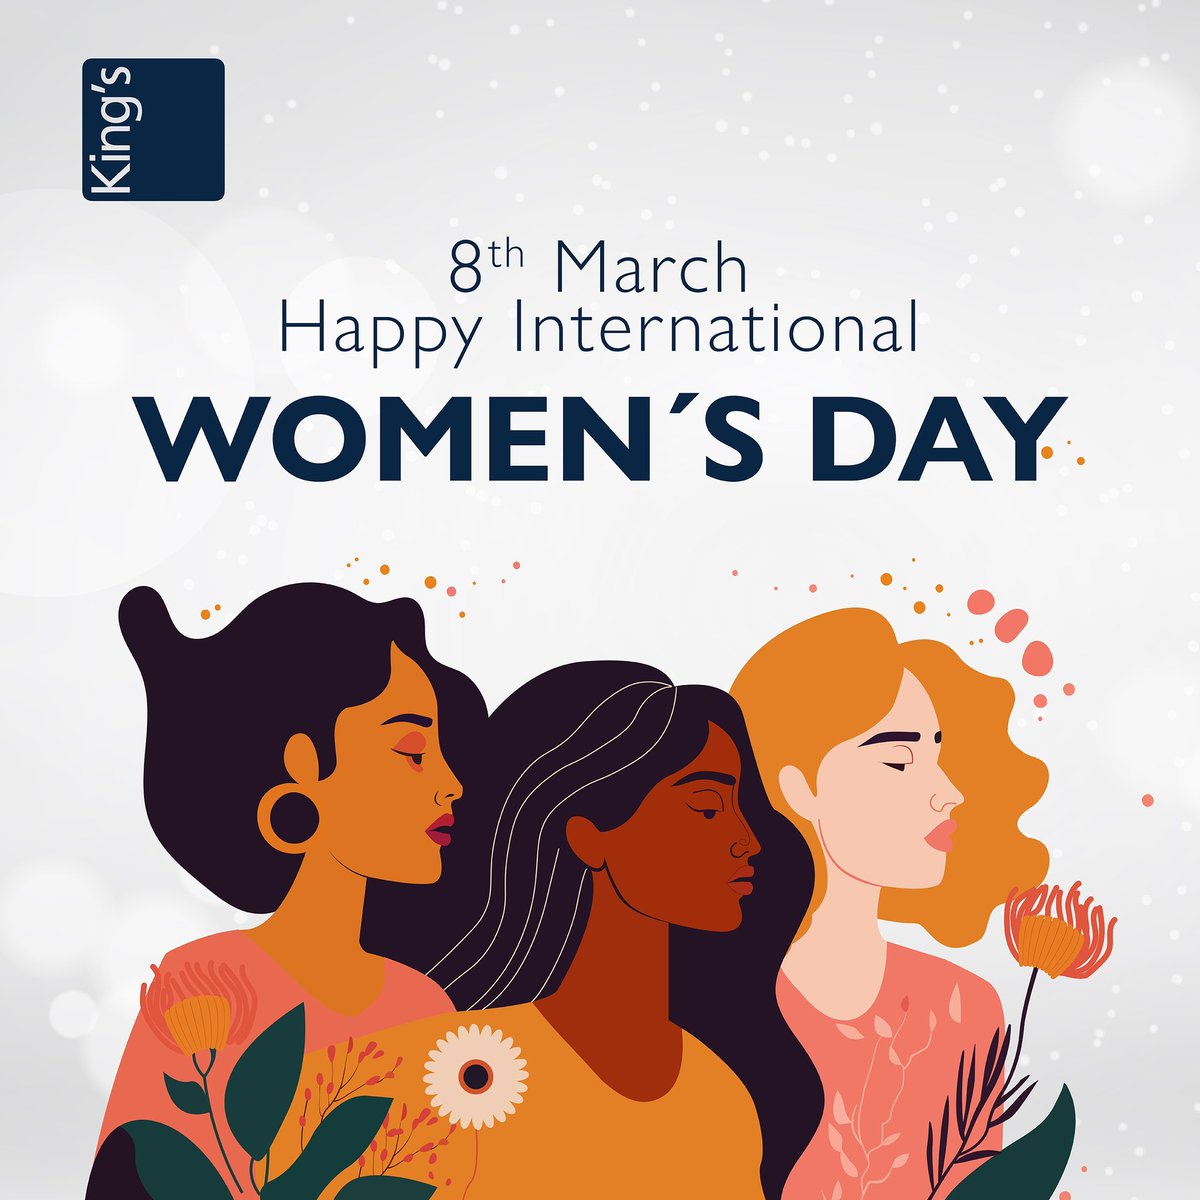 Happy International Women’s Day #EmbraceEquity